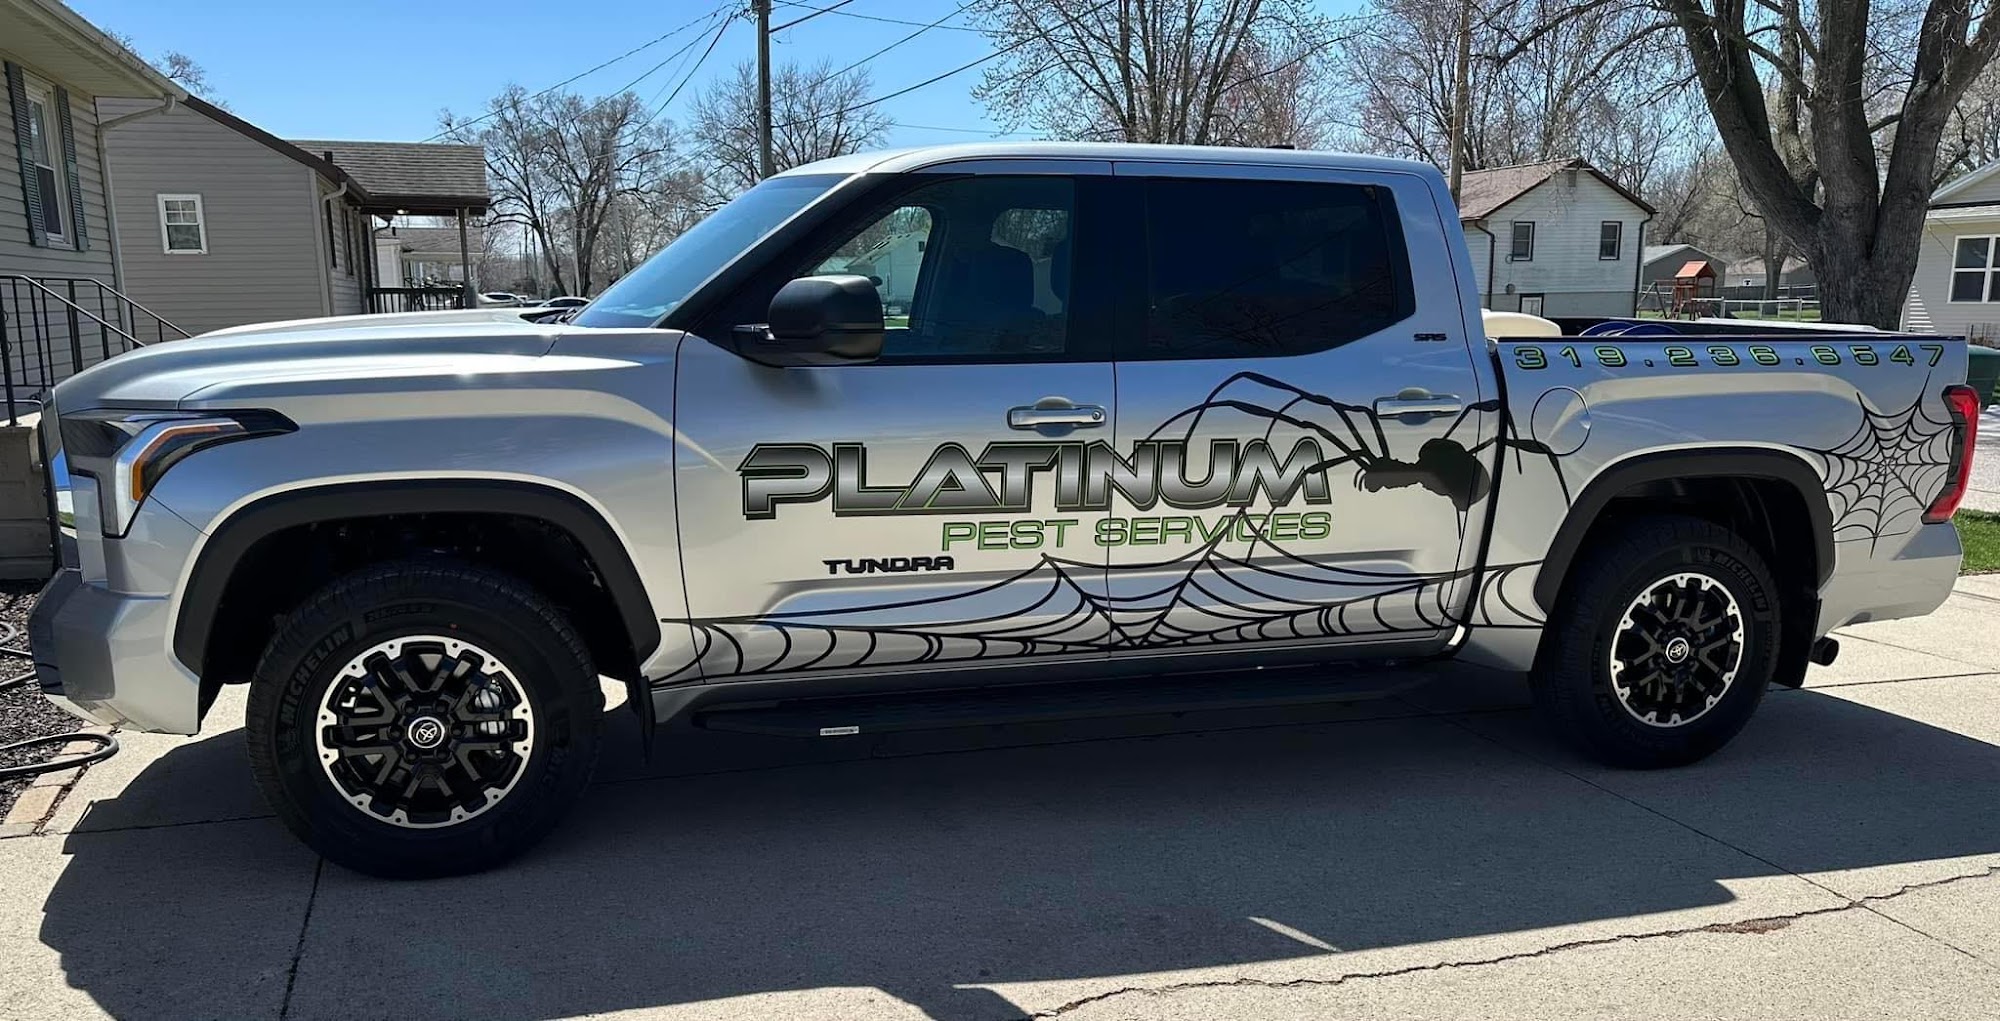 Platinum Pest Services 3470 Lafayette Rd, Evansdale Iowa 50707